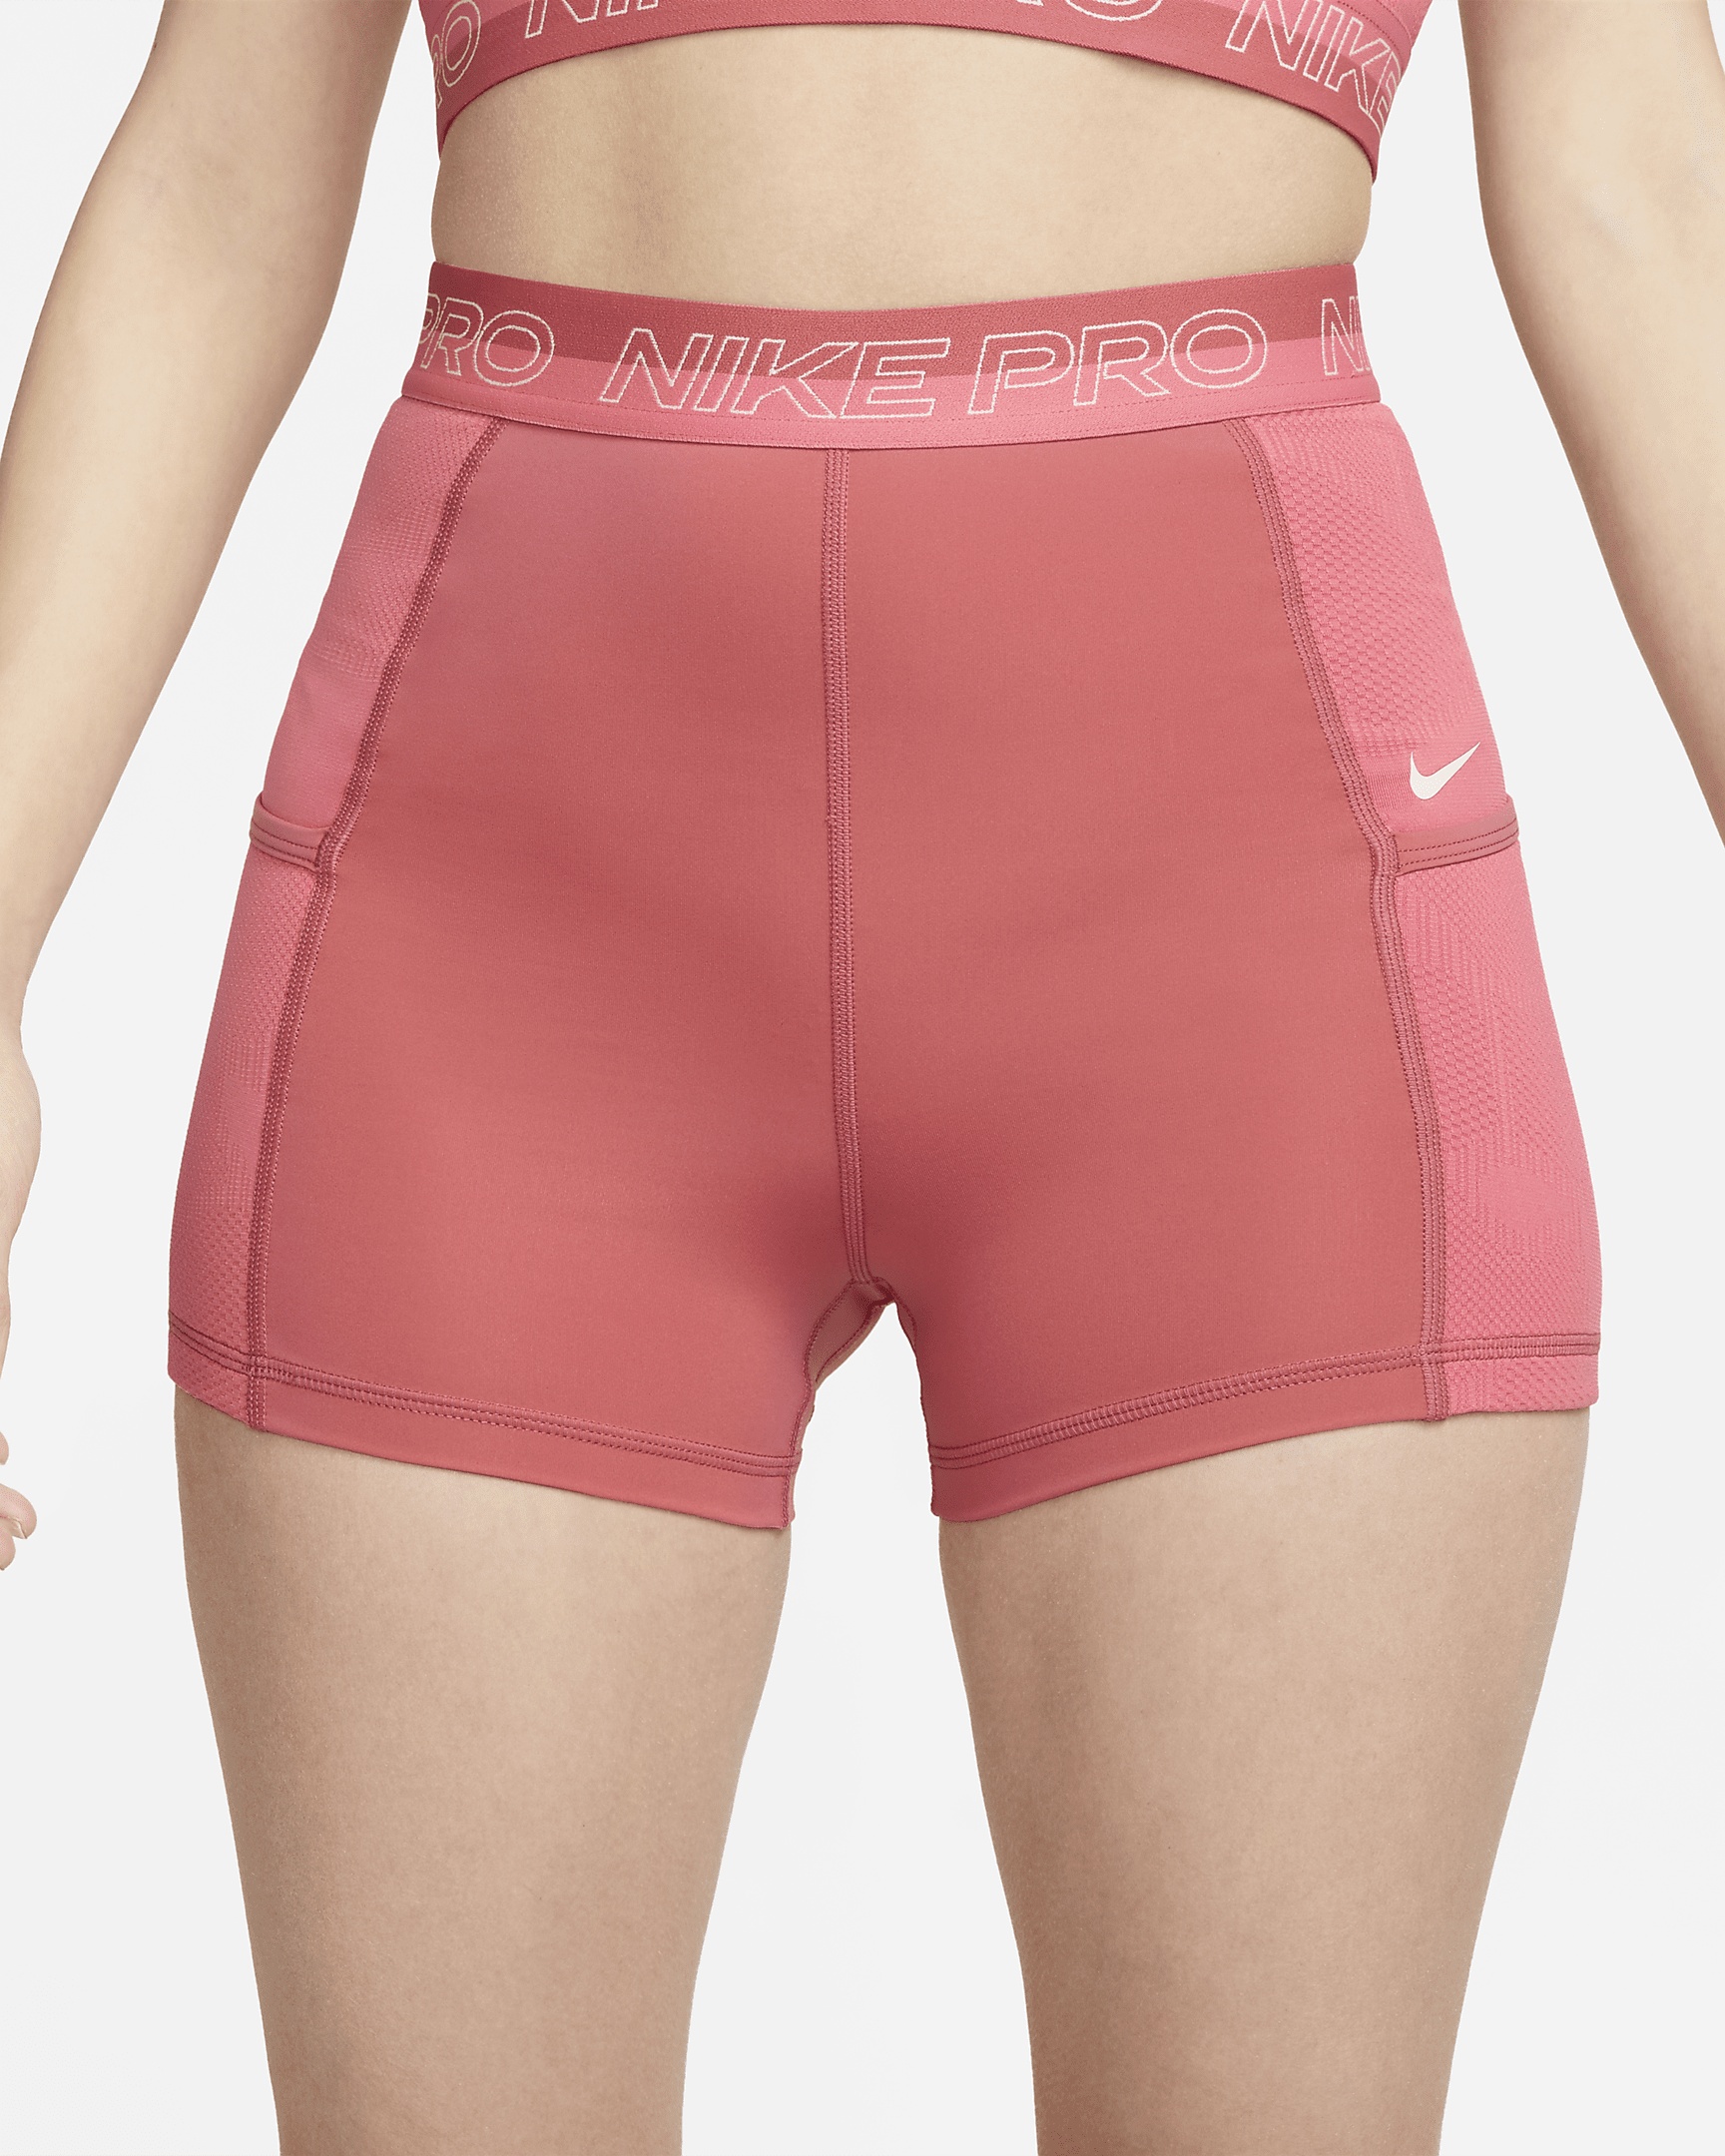 Women's Nike Pro High-Waisted 3" Training Shorts with Pockets - 2